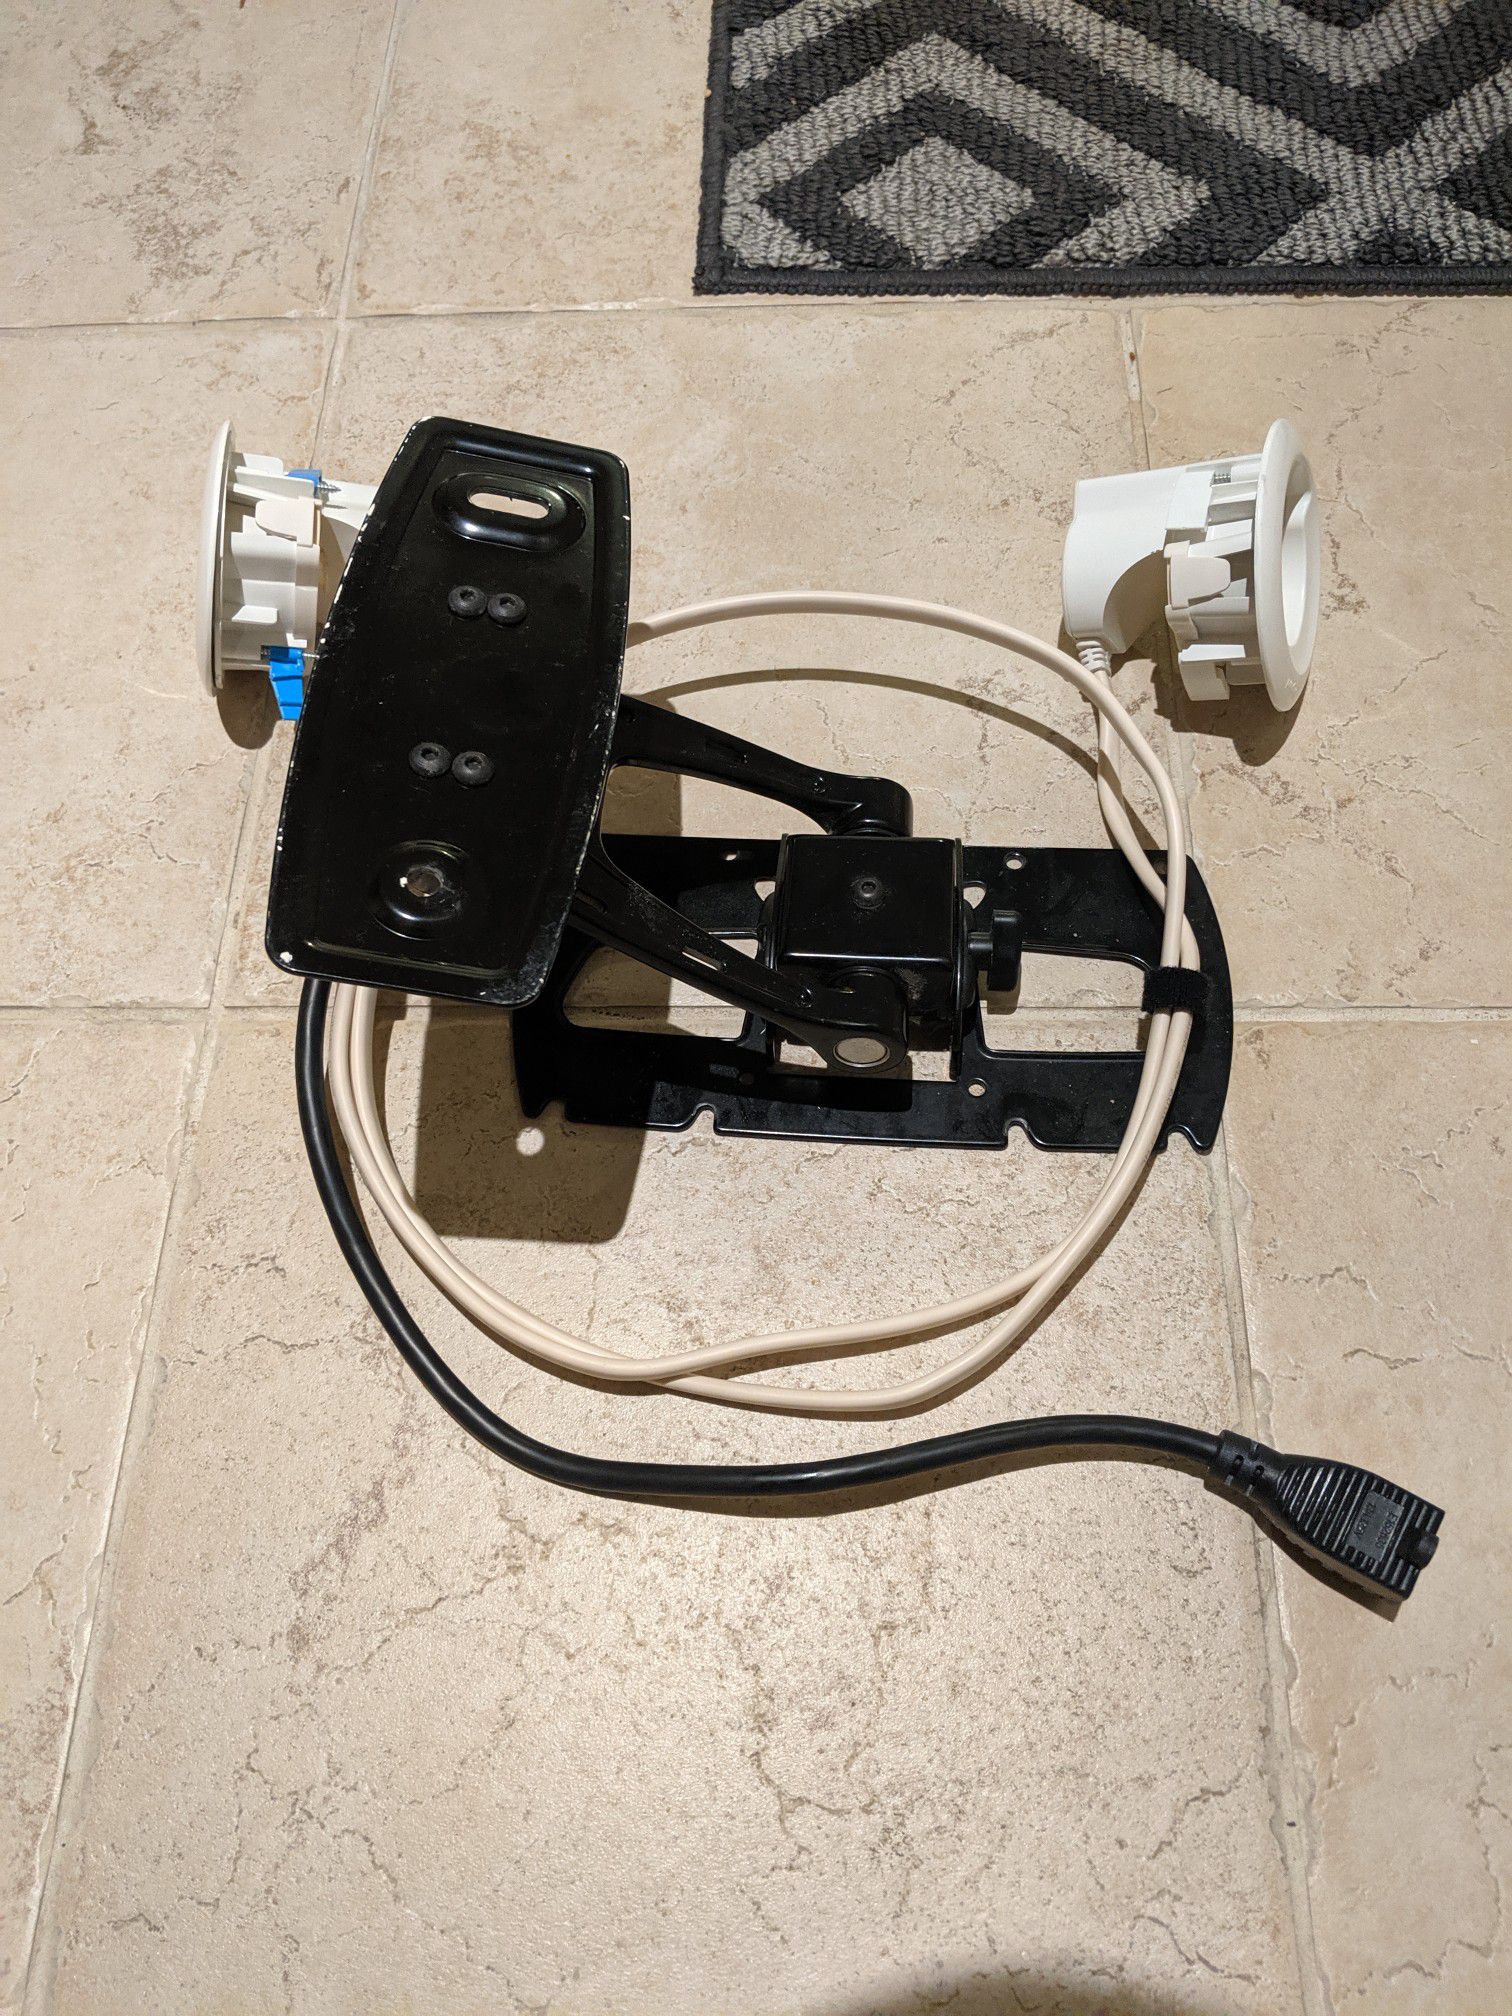 Rocketfish TV mount and power kit